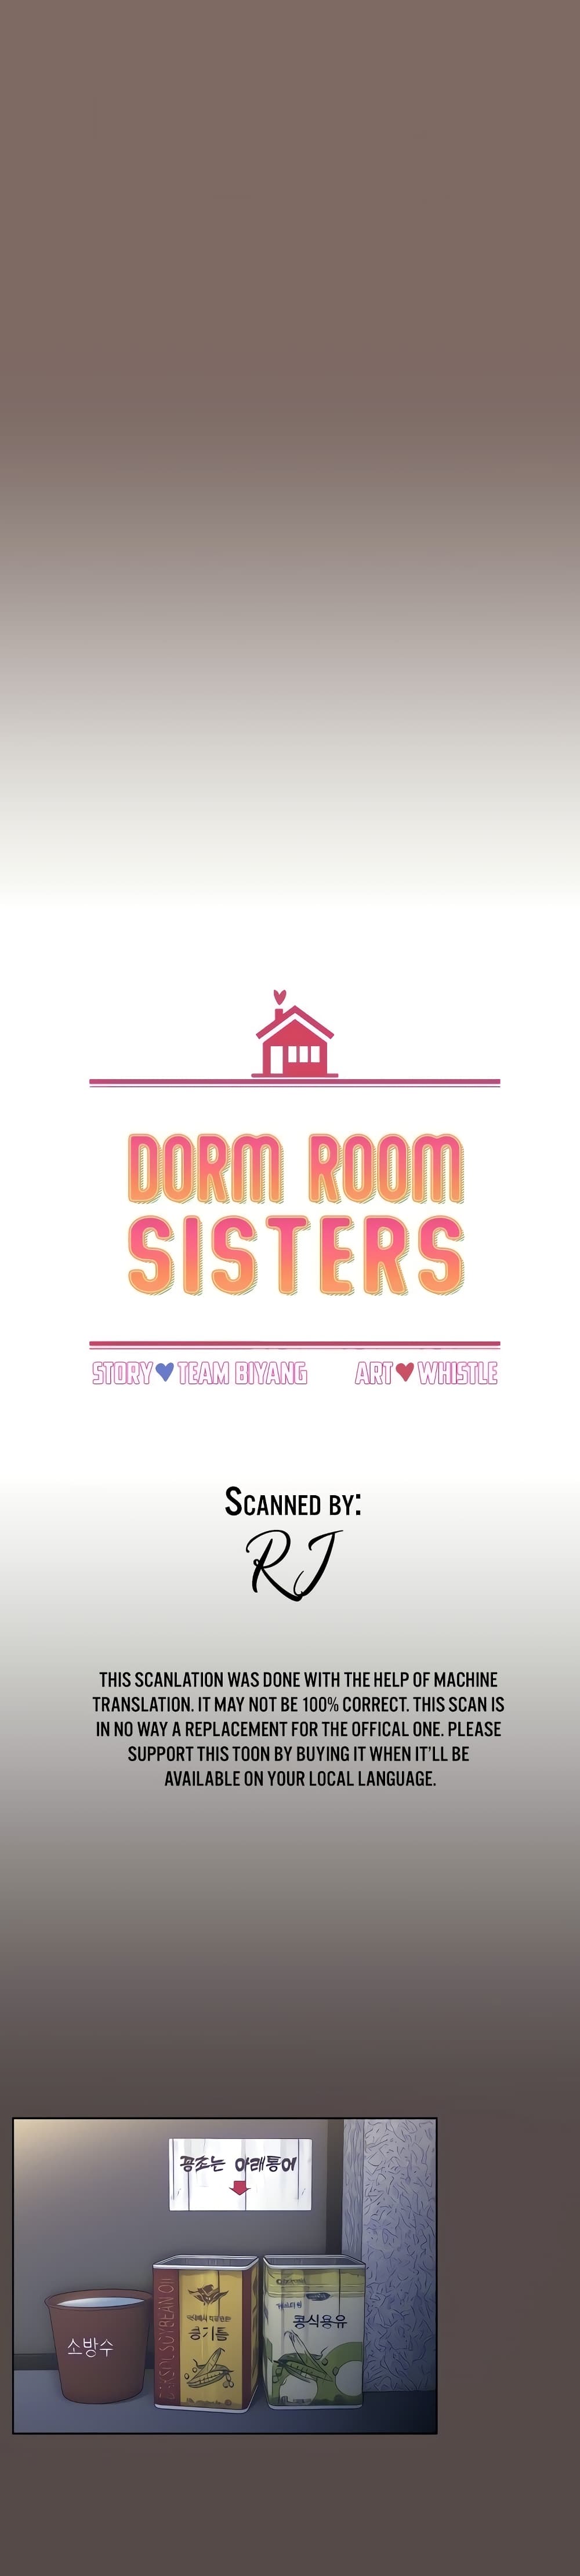 Dorm Room Sisters 1 14